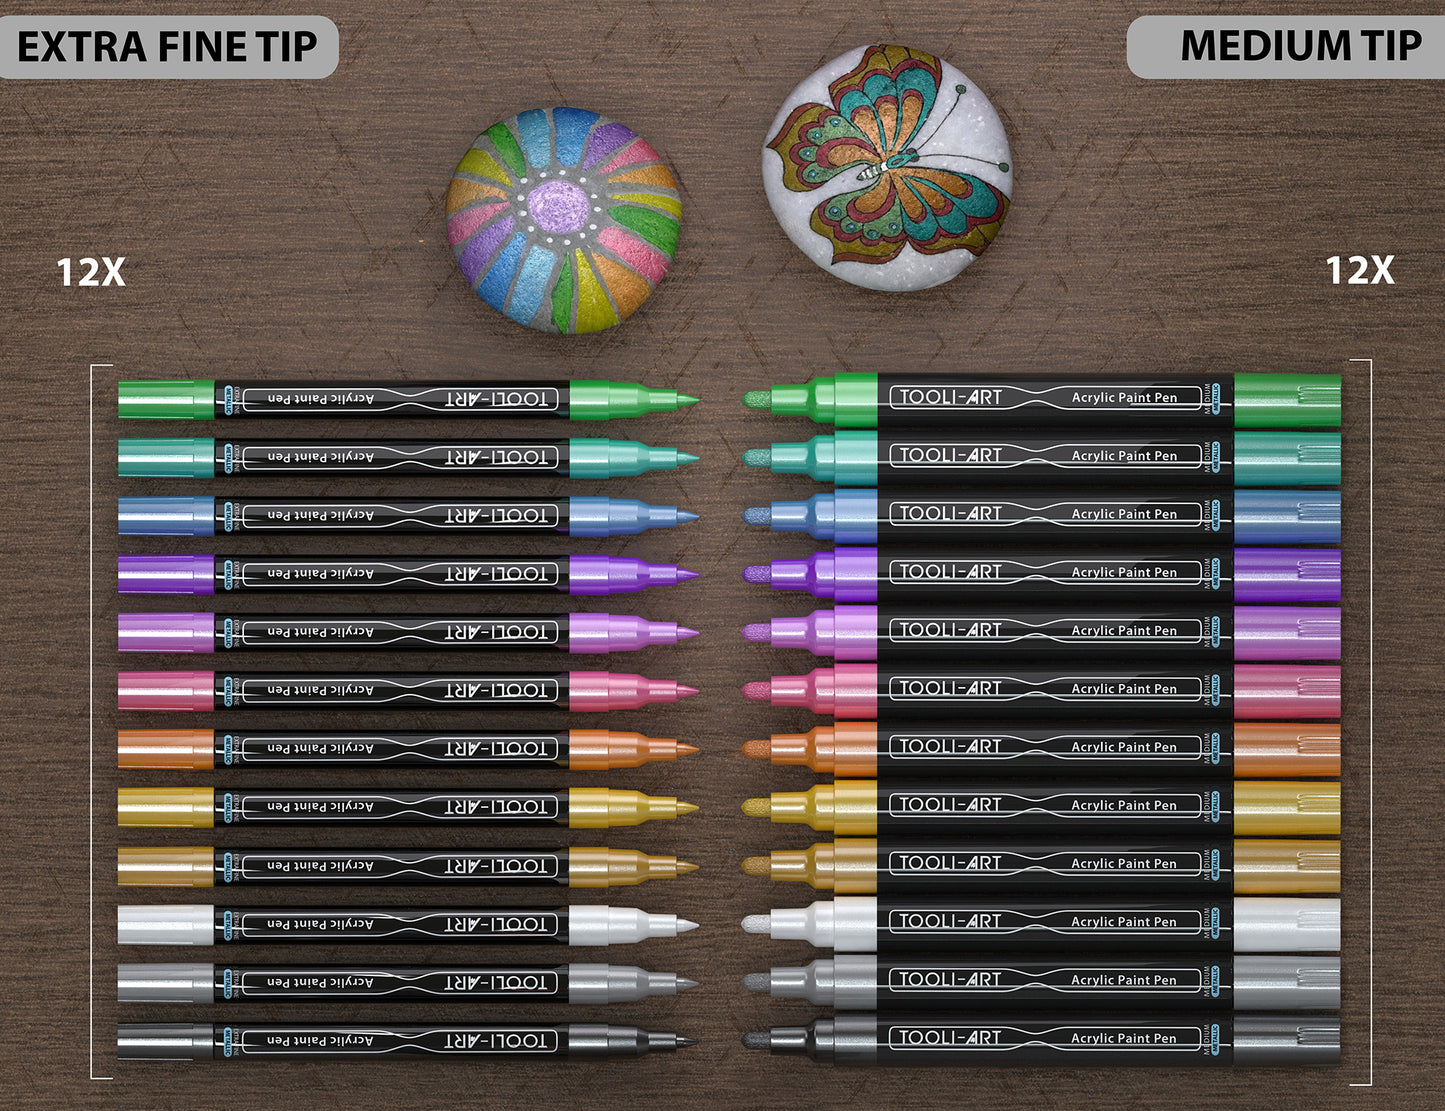 TOOLI-ART Metallic Acrylic Paint Pens 24 Marker Set (0.7mm EXTRA FINE + 3.0mm MEDIUM)